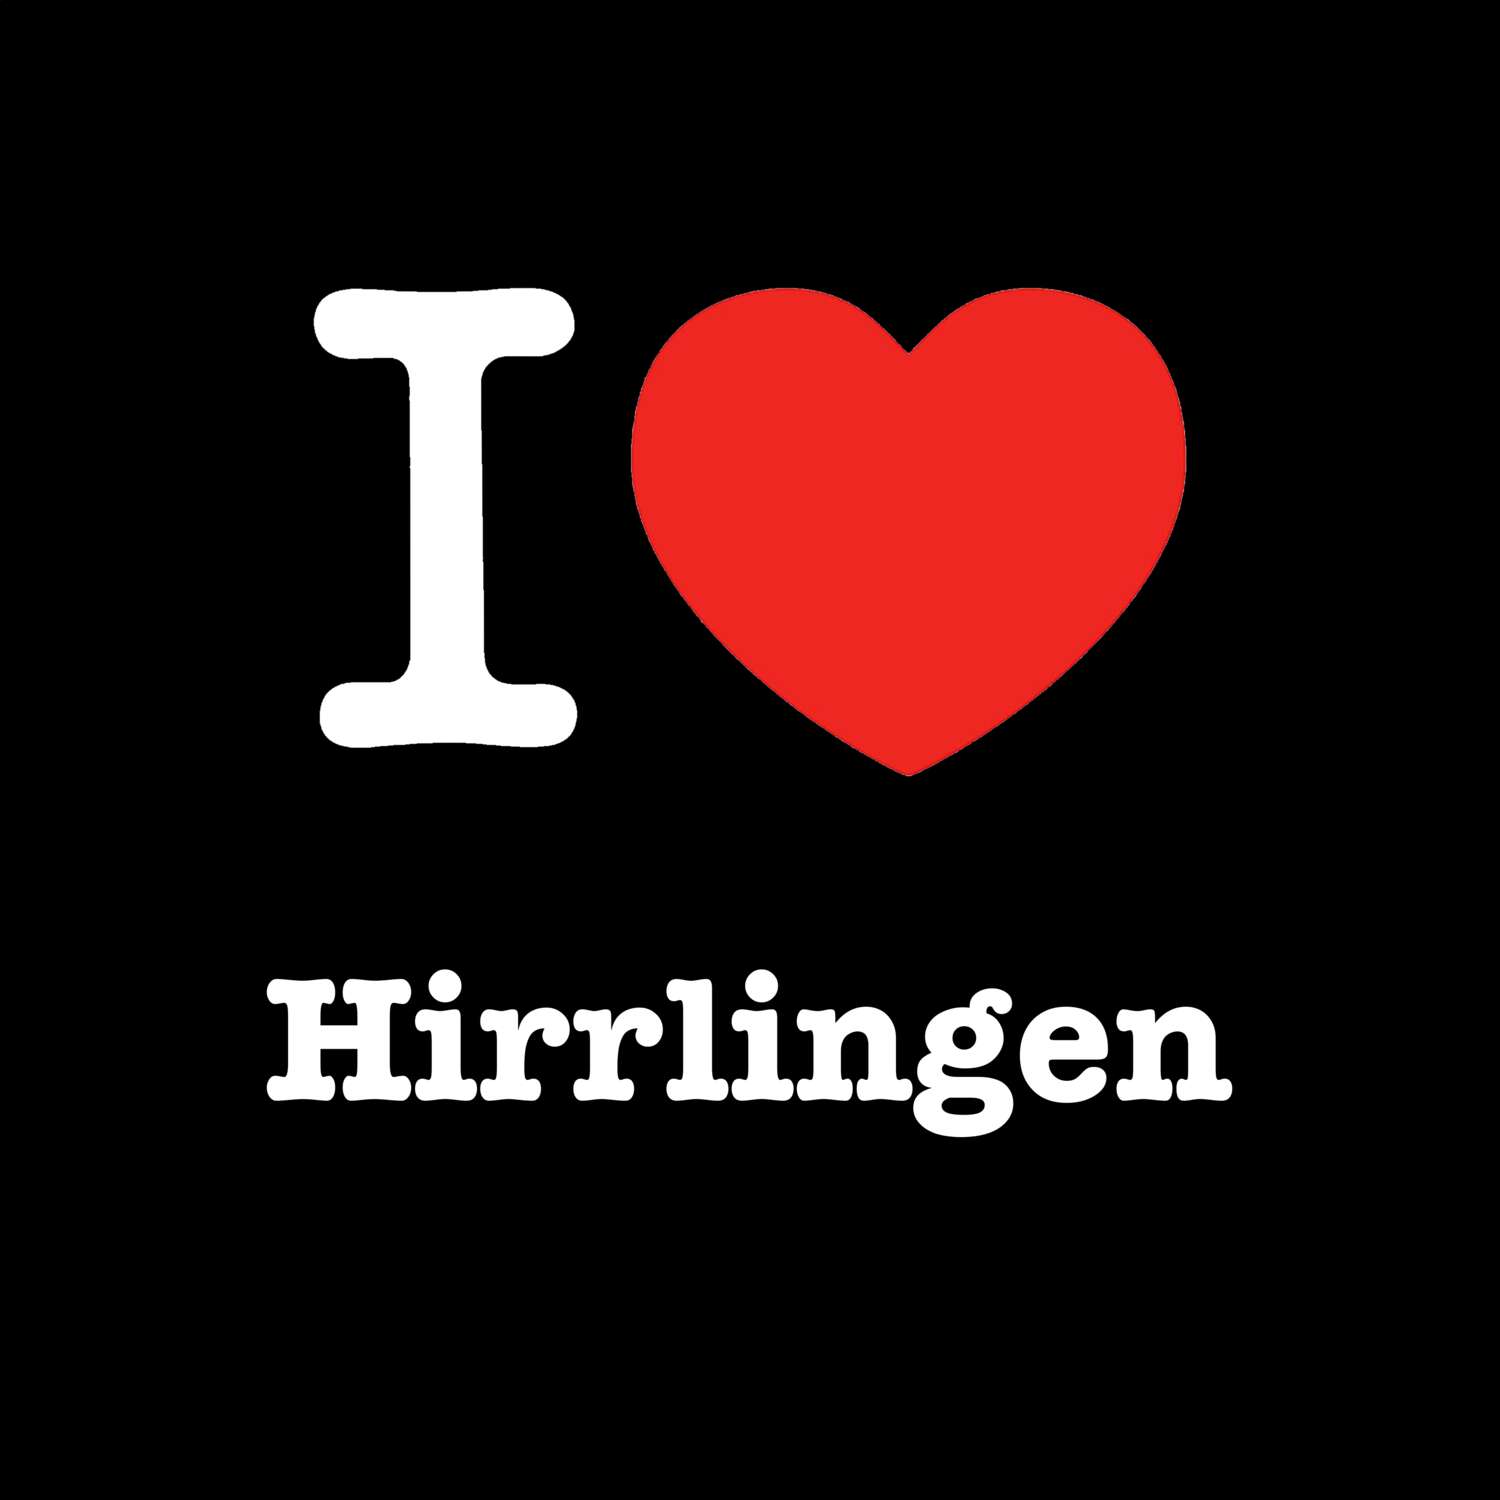 Hirrlingen T-Shirt »I love«